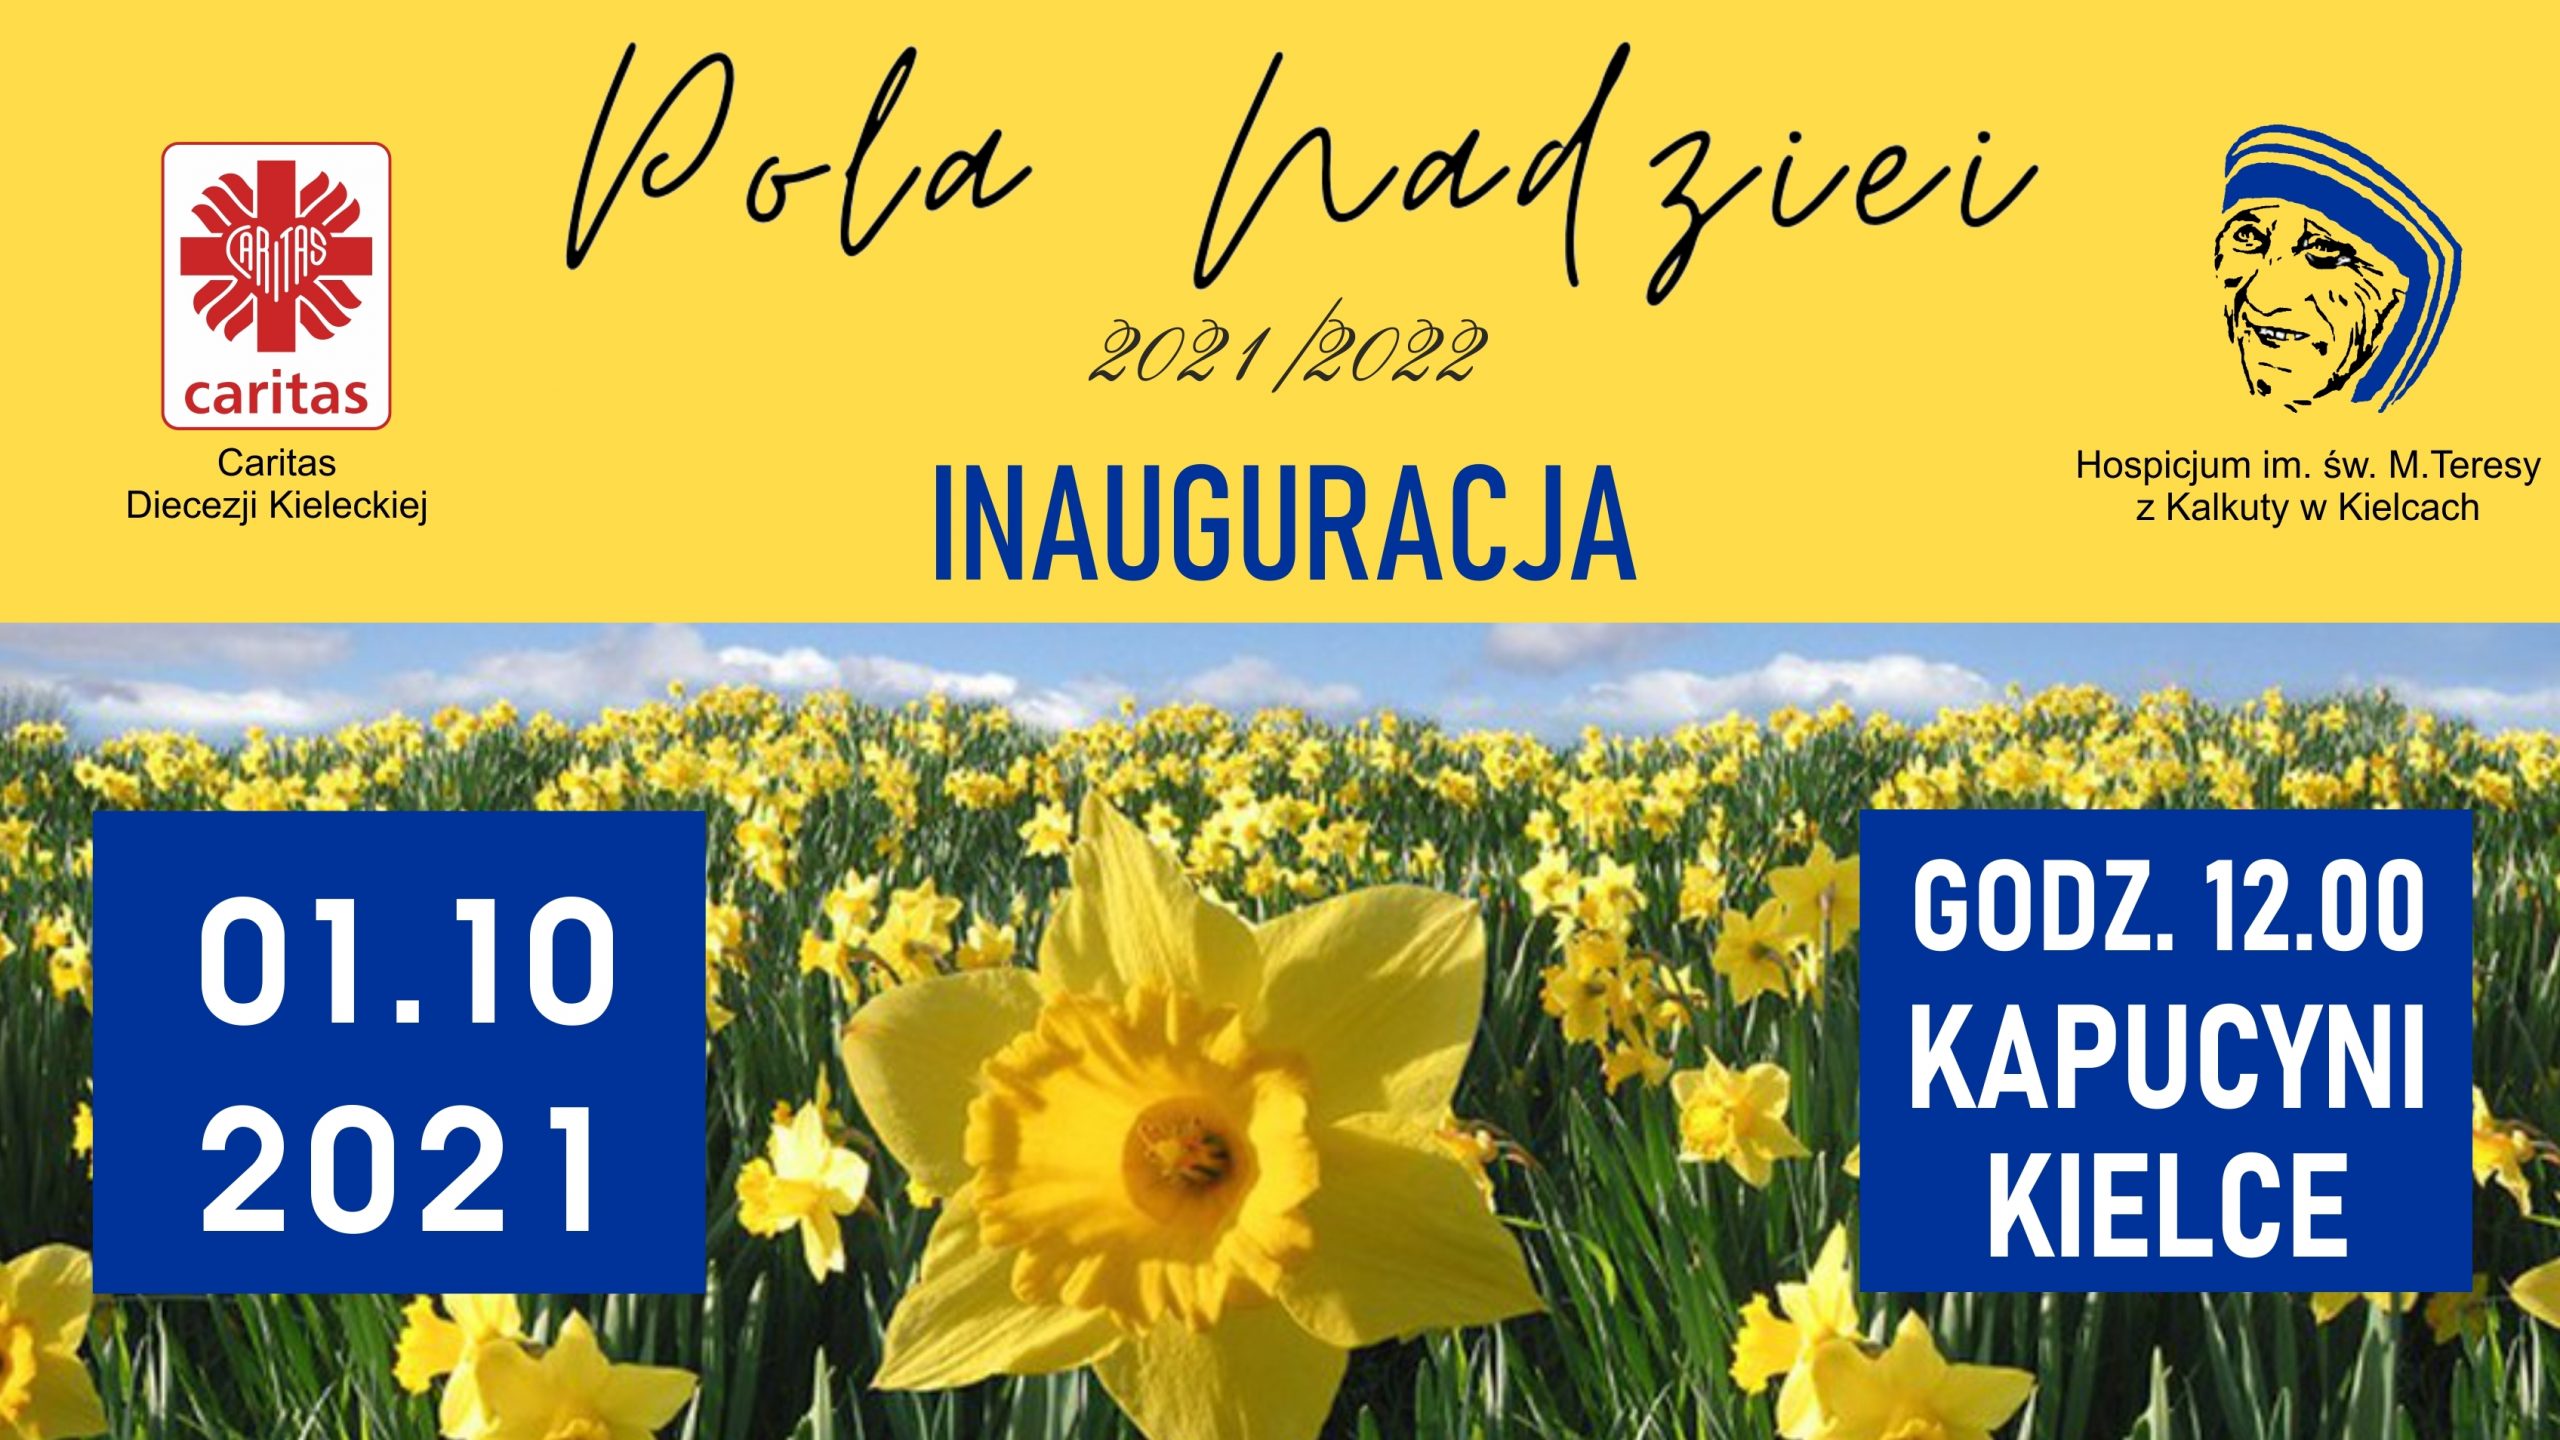 You are currently viewing Inauguracja Akcji “Pola Nadziei 2021/2022”